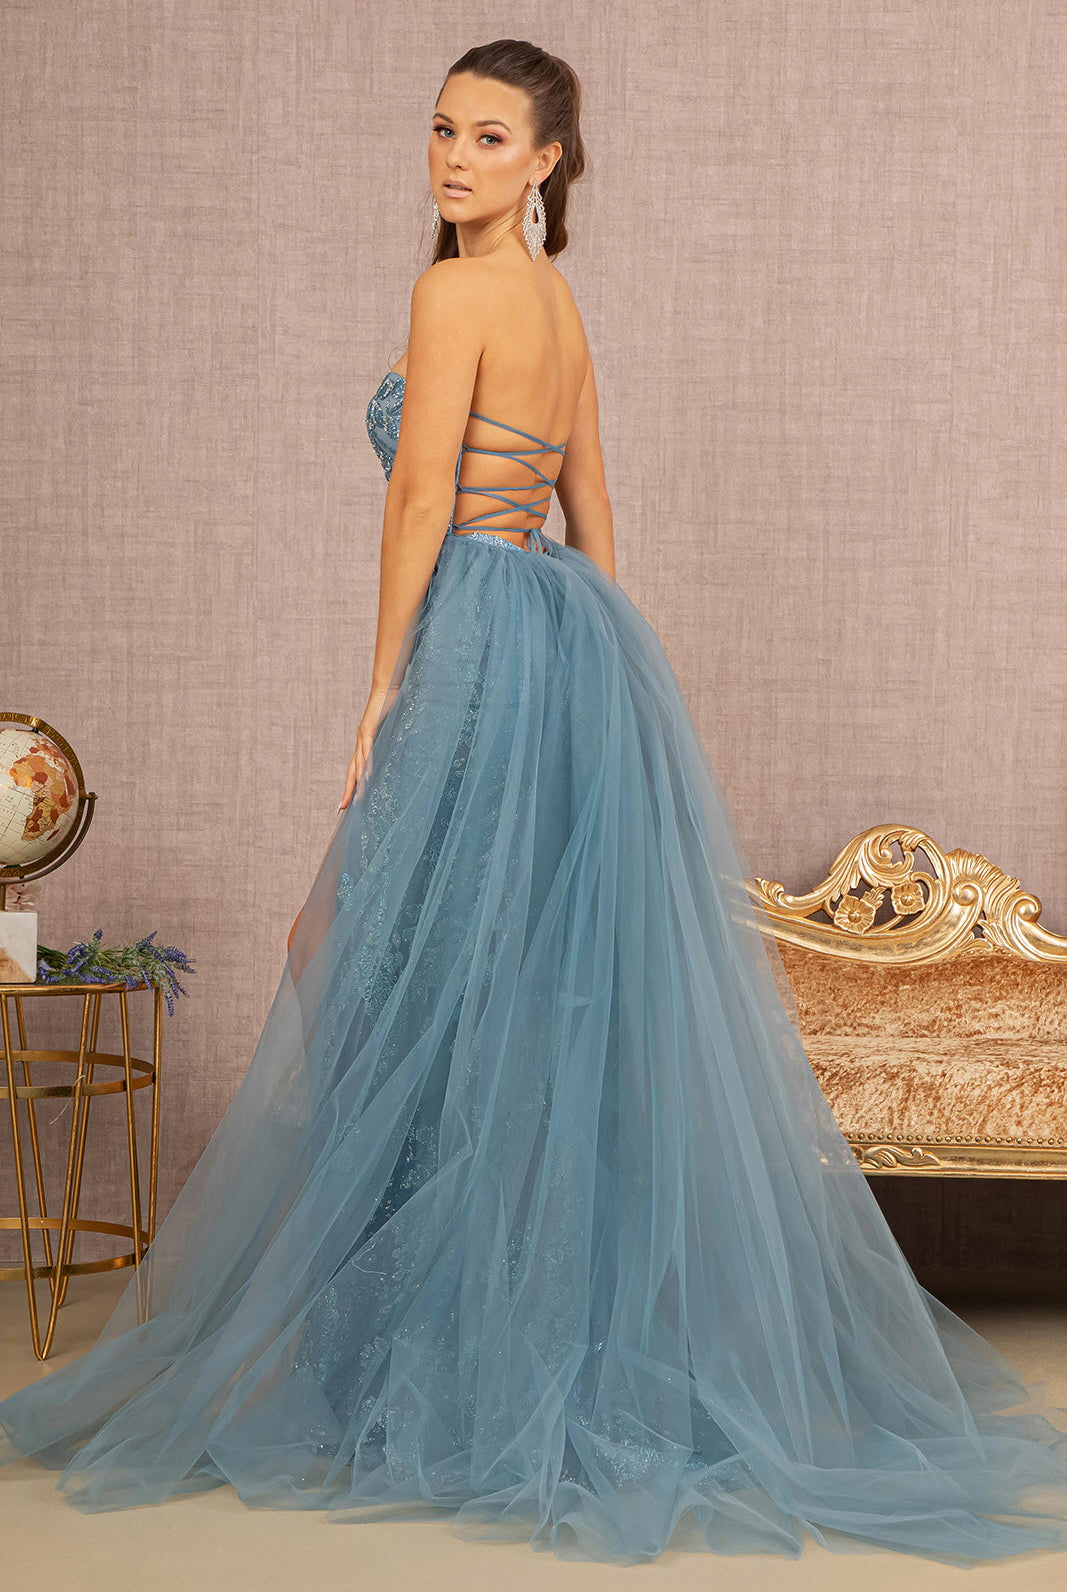 Sweetheart Jewel Glitter Mermaid Dress Detachable Mesh Layer GLGL3156-PROM-smcfashion.com